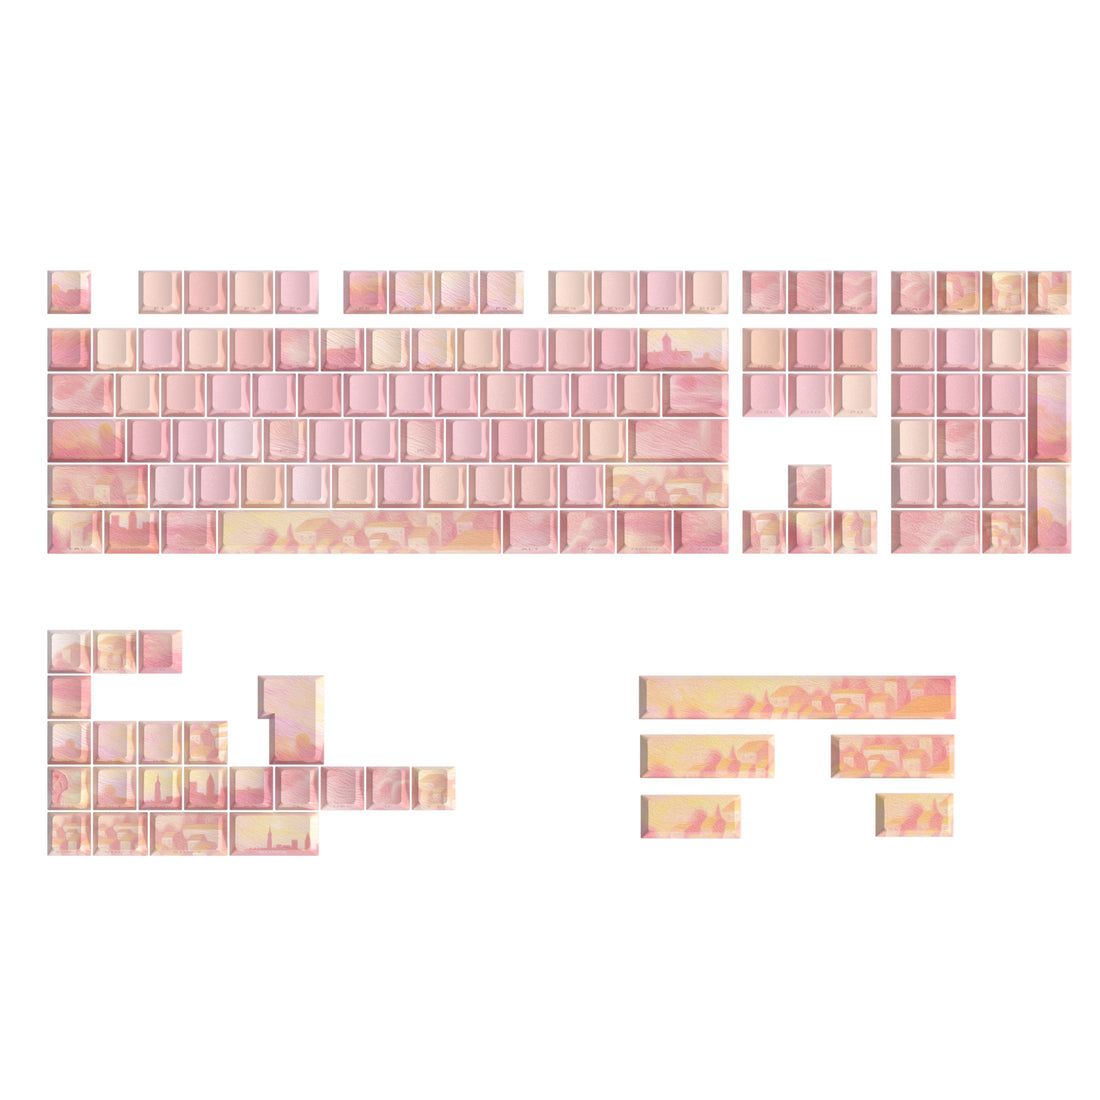 PIIFOX CKC-02 Pink Story Pastel Painting Side-printed OEM Profile Keycap Set 135 Keys